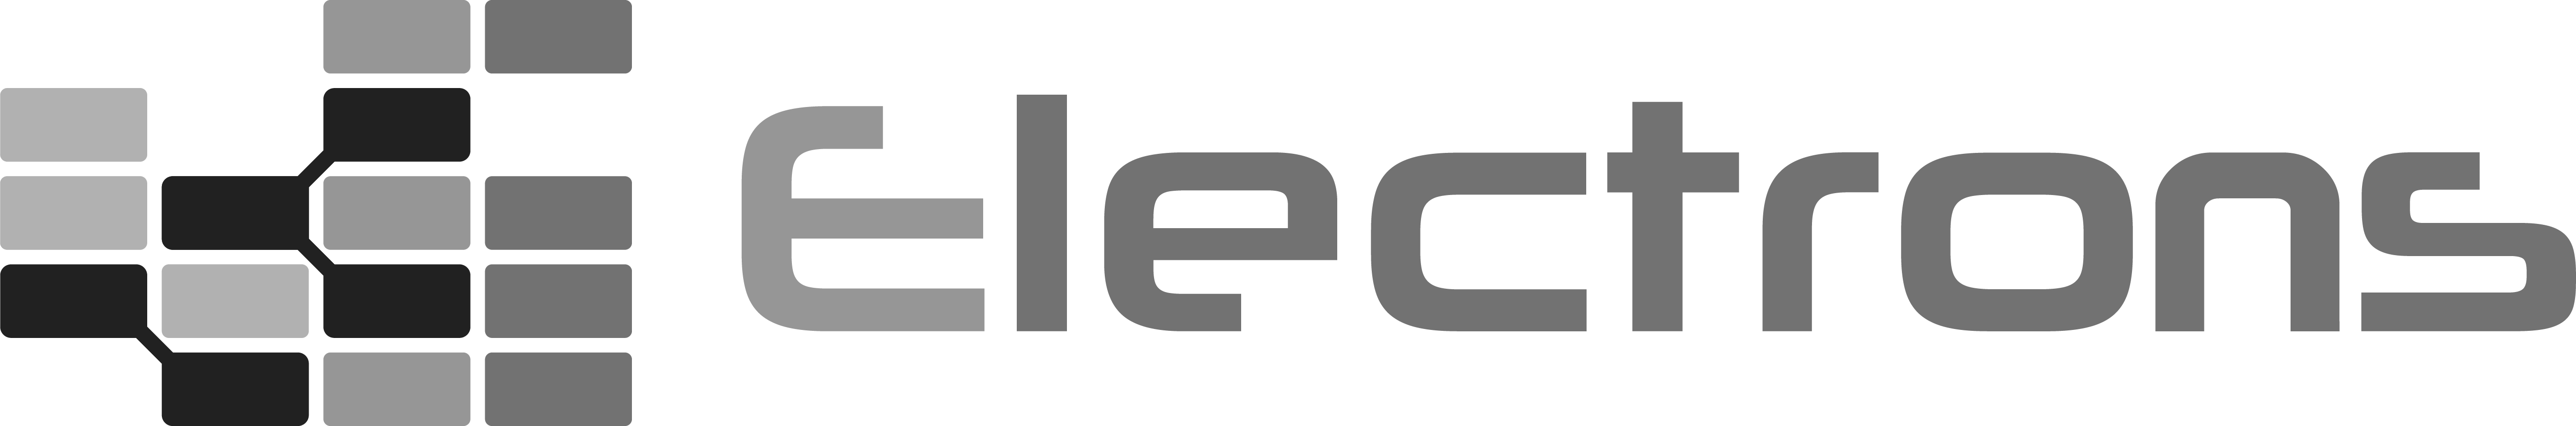 Logo Electrons